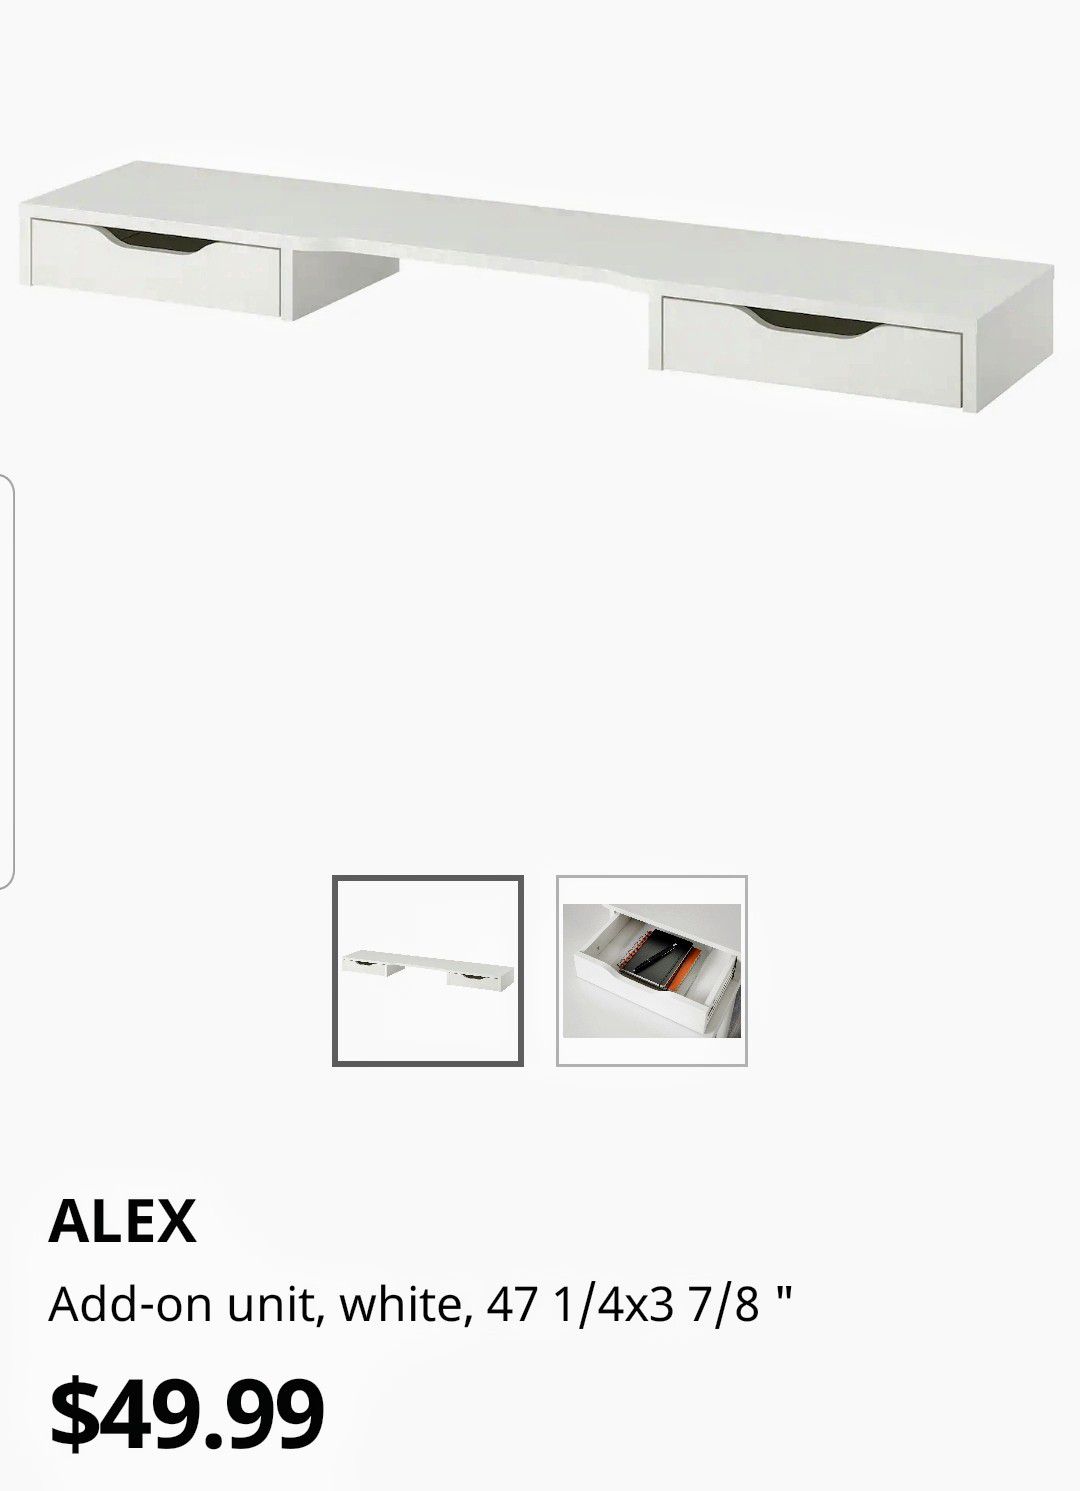 IKEA Alex Desk Hutch Add on